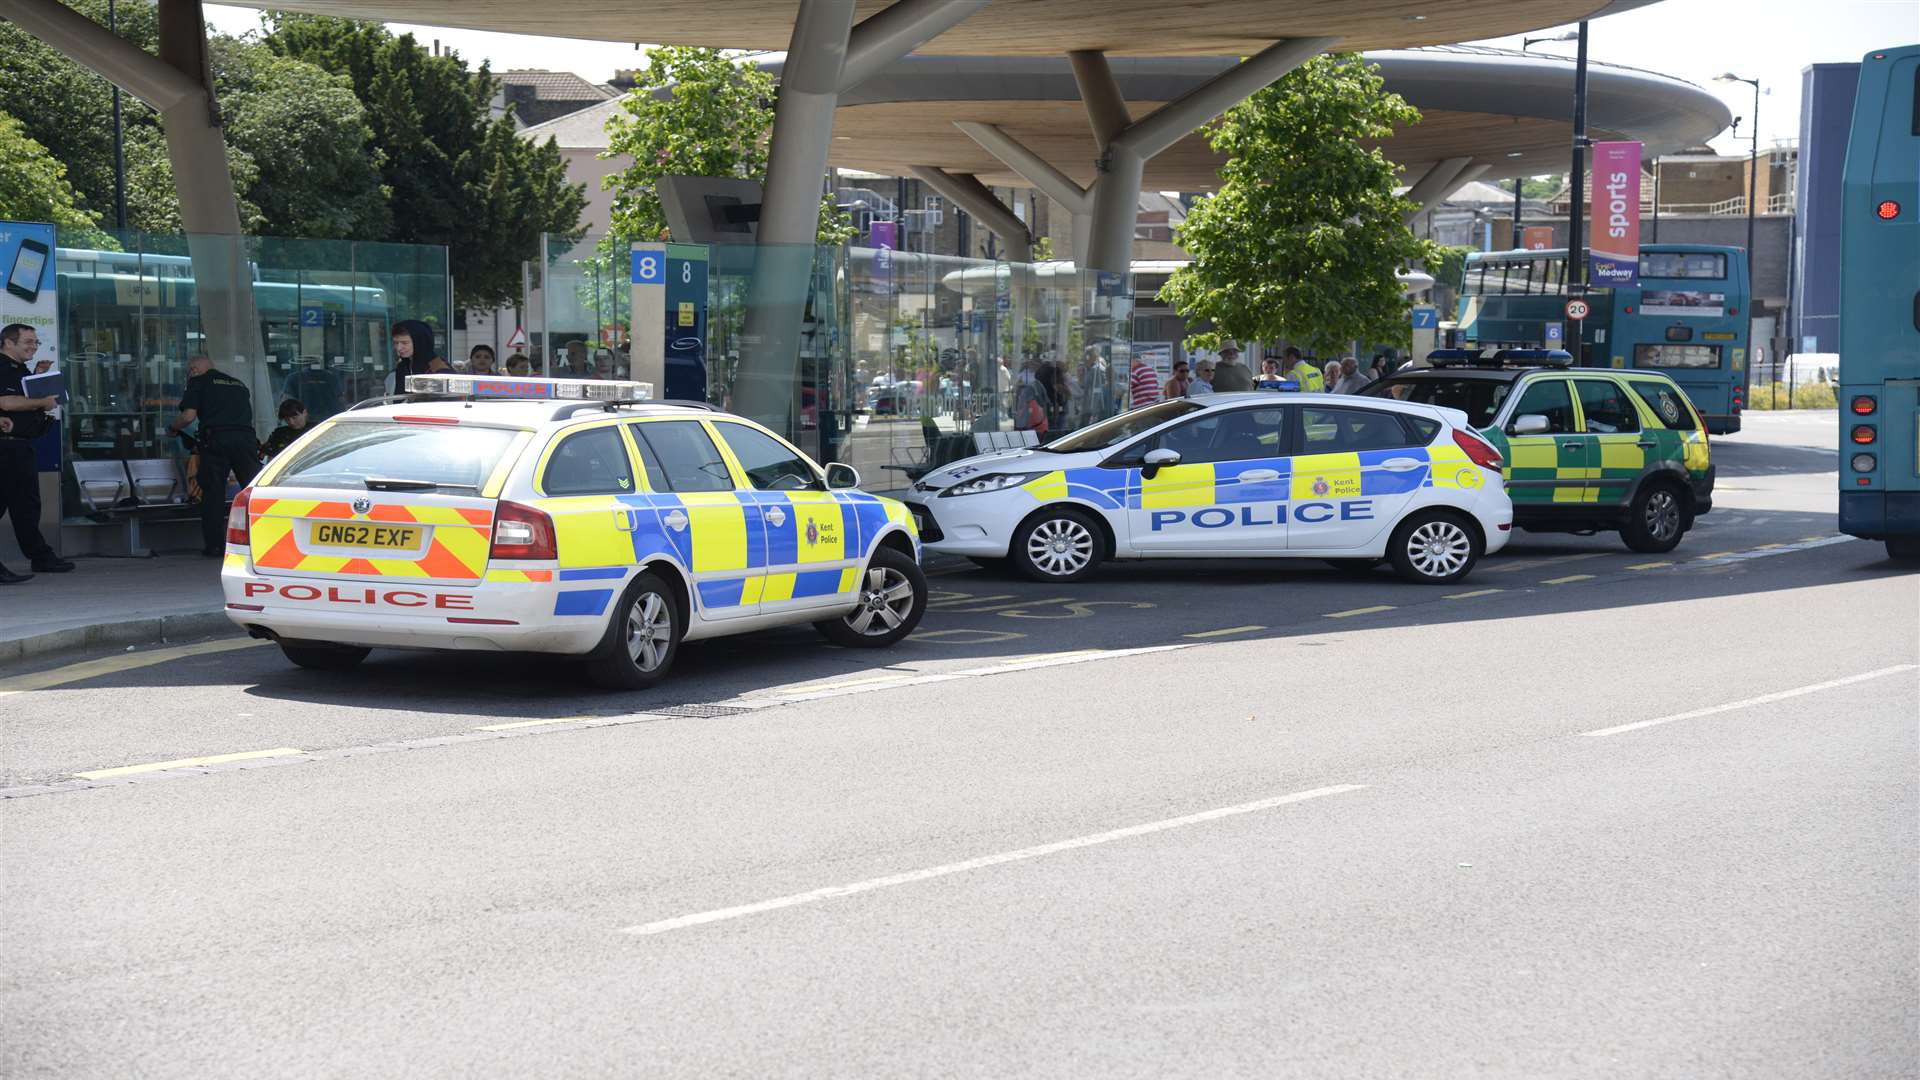 Police and ambulance vehicles at Chatham Bus Station